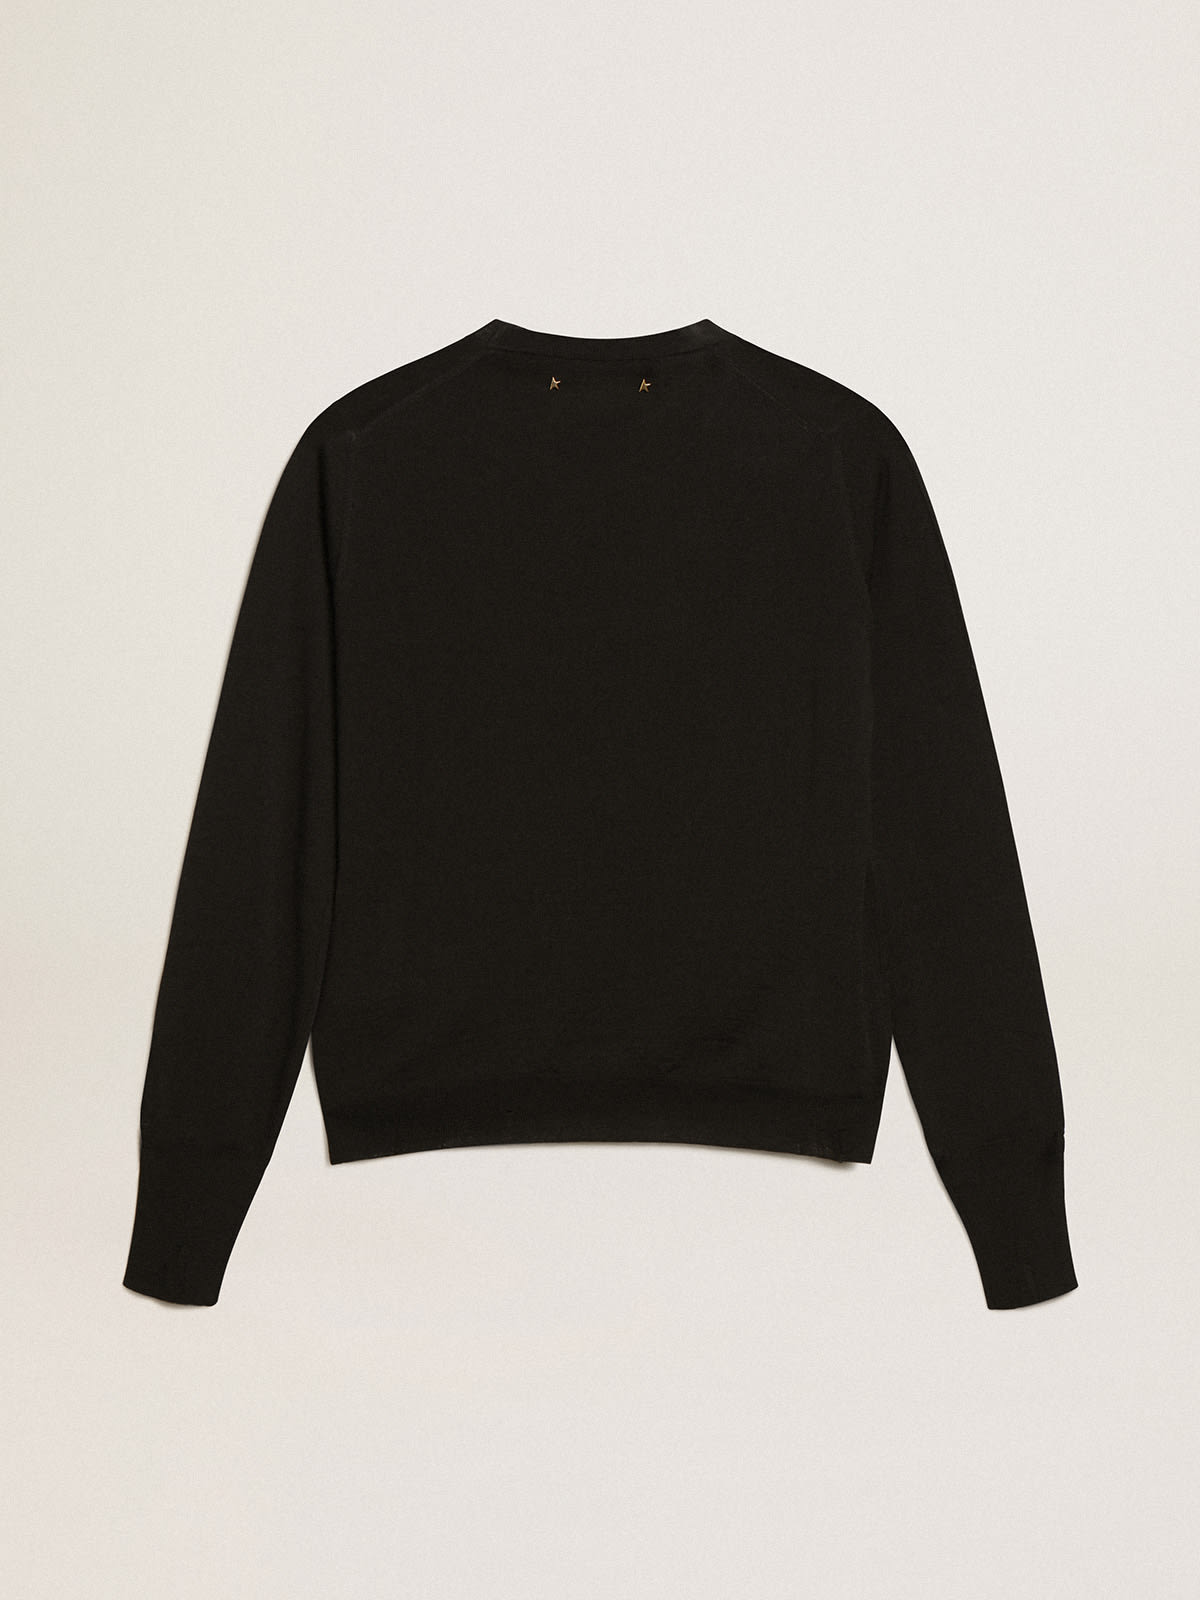 Golden Goose - Women's round-neck sweater in black wool in 